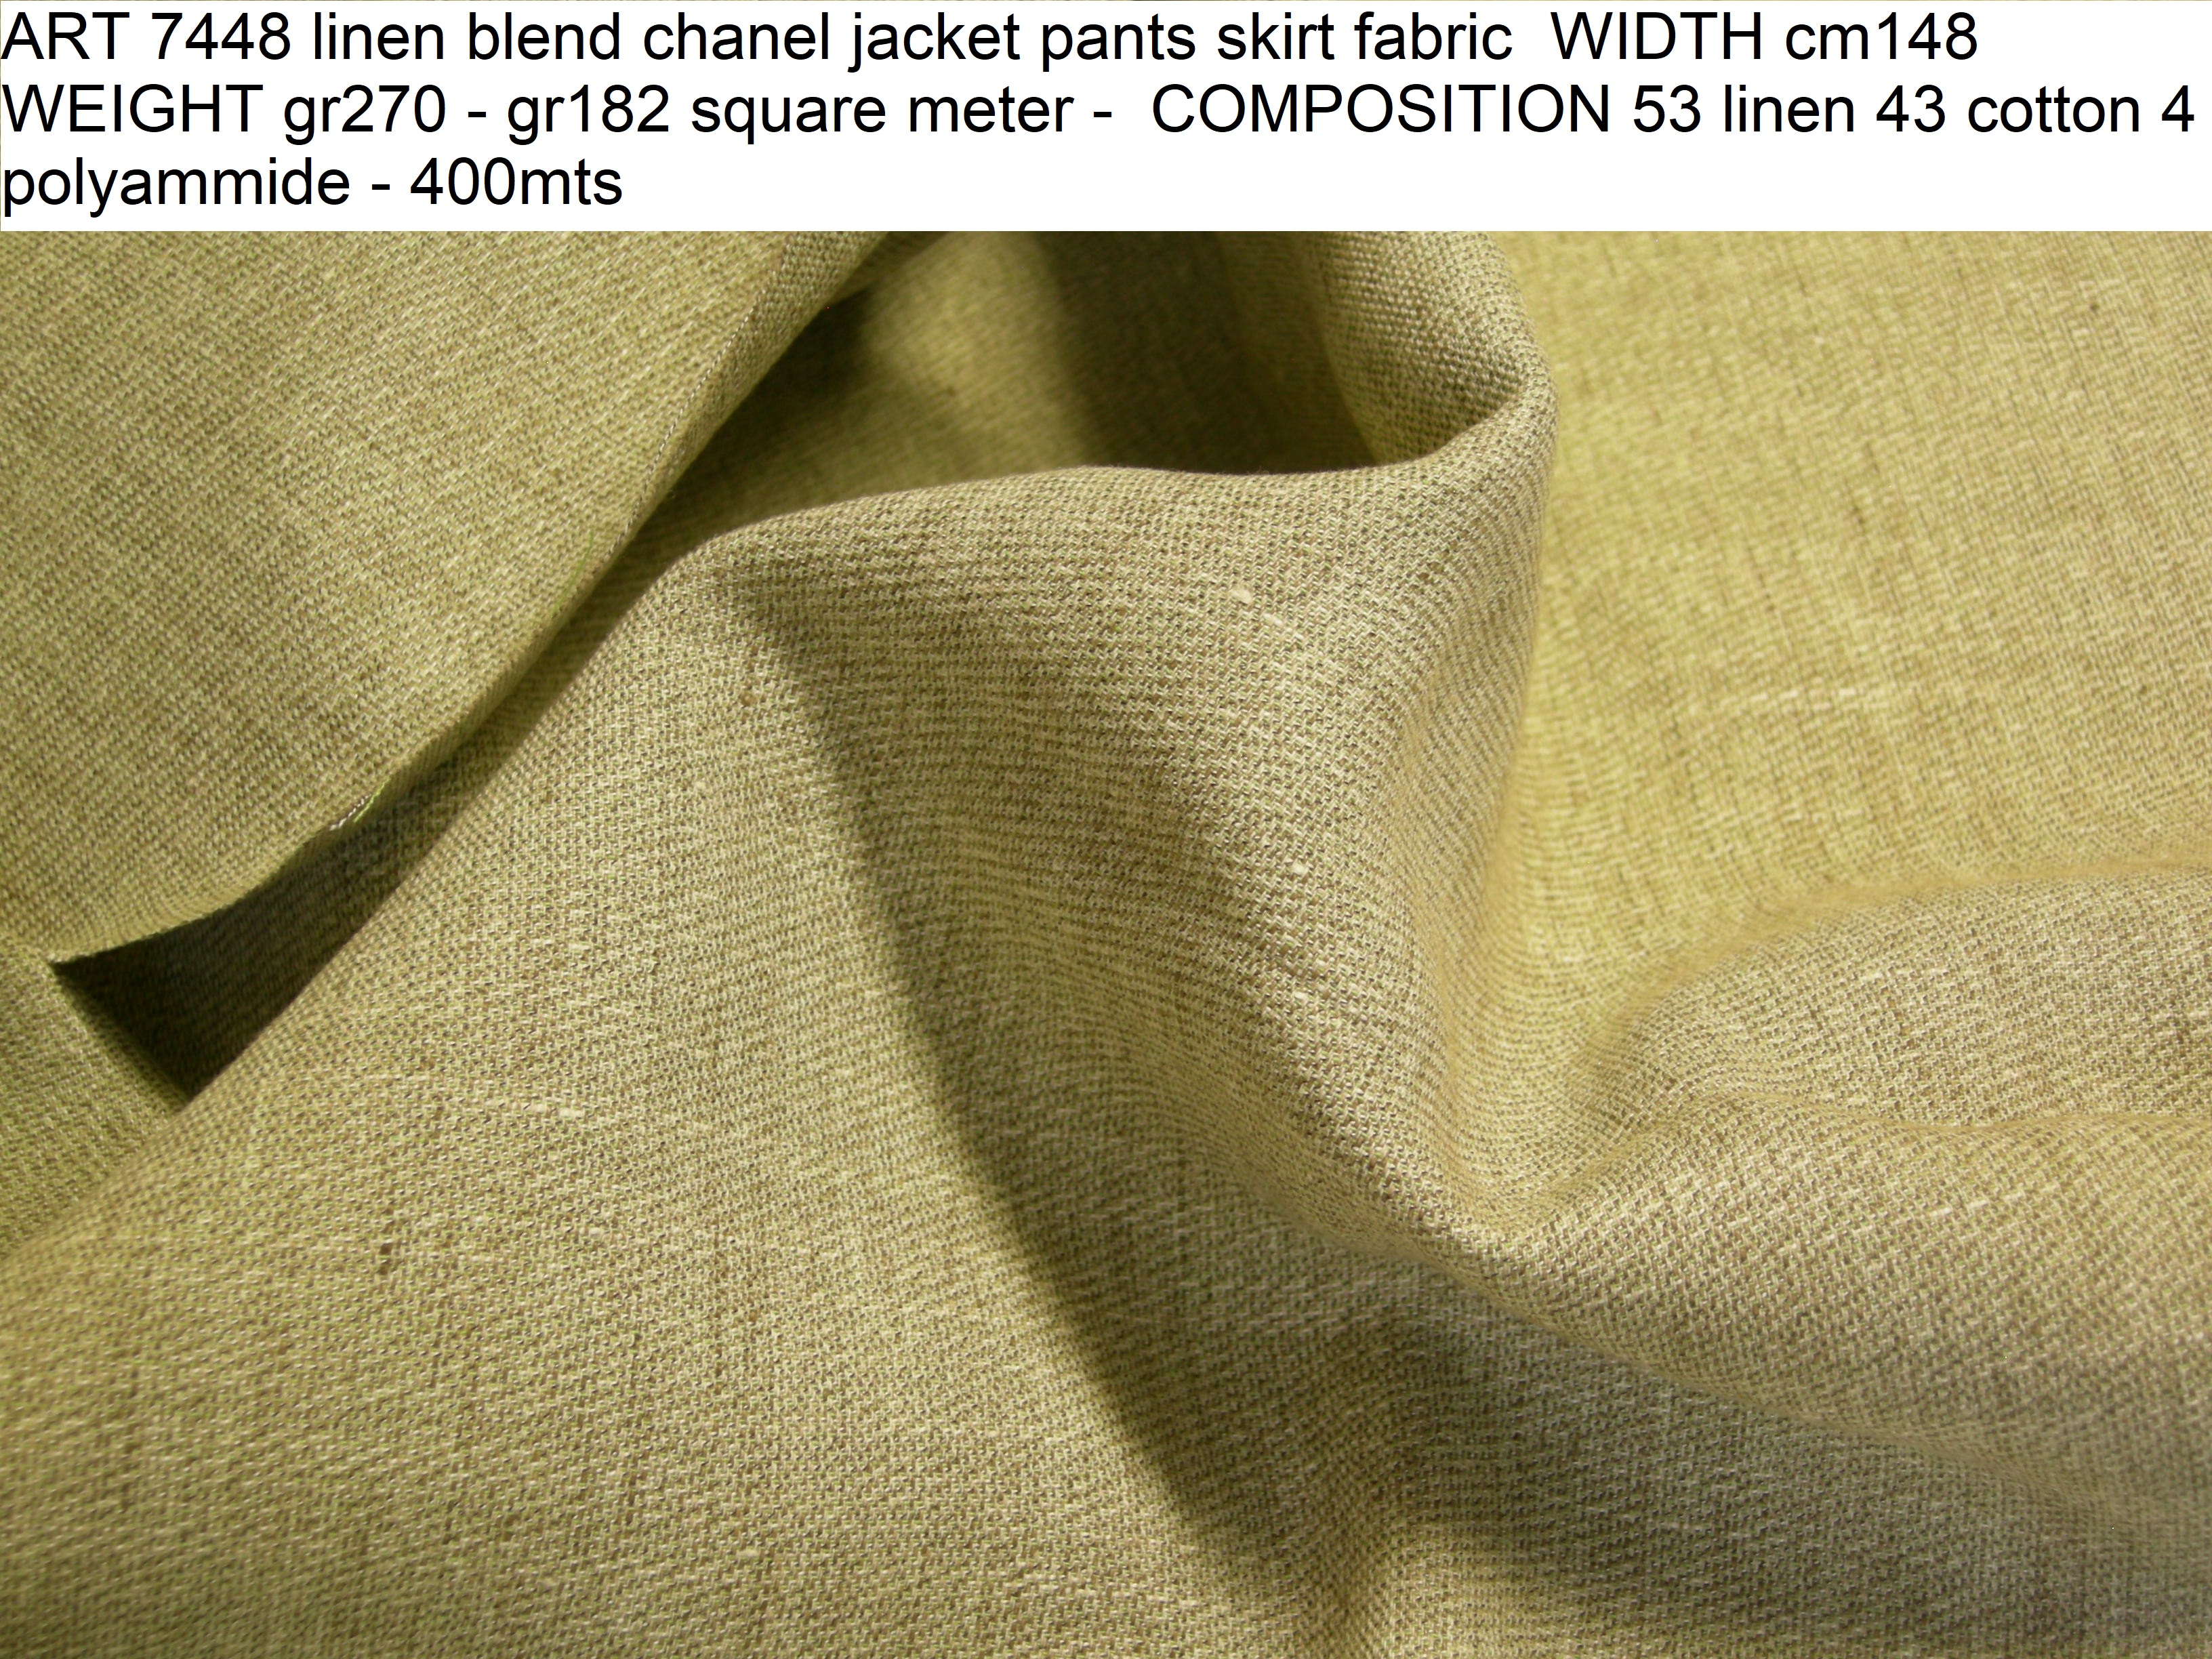 ART 7448 linen blend chanel jacket pants skirt fabric WIDTH cm148 WEIGHT gr270 - gr182 square meter - COMPOSITION 53 linen 43 cotton 4 polyammide - 400mts